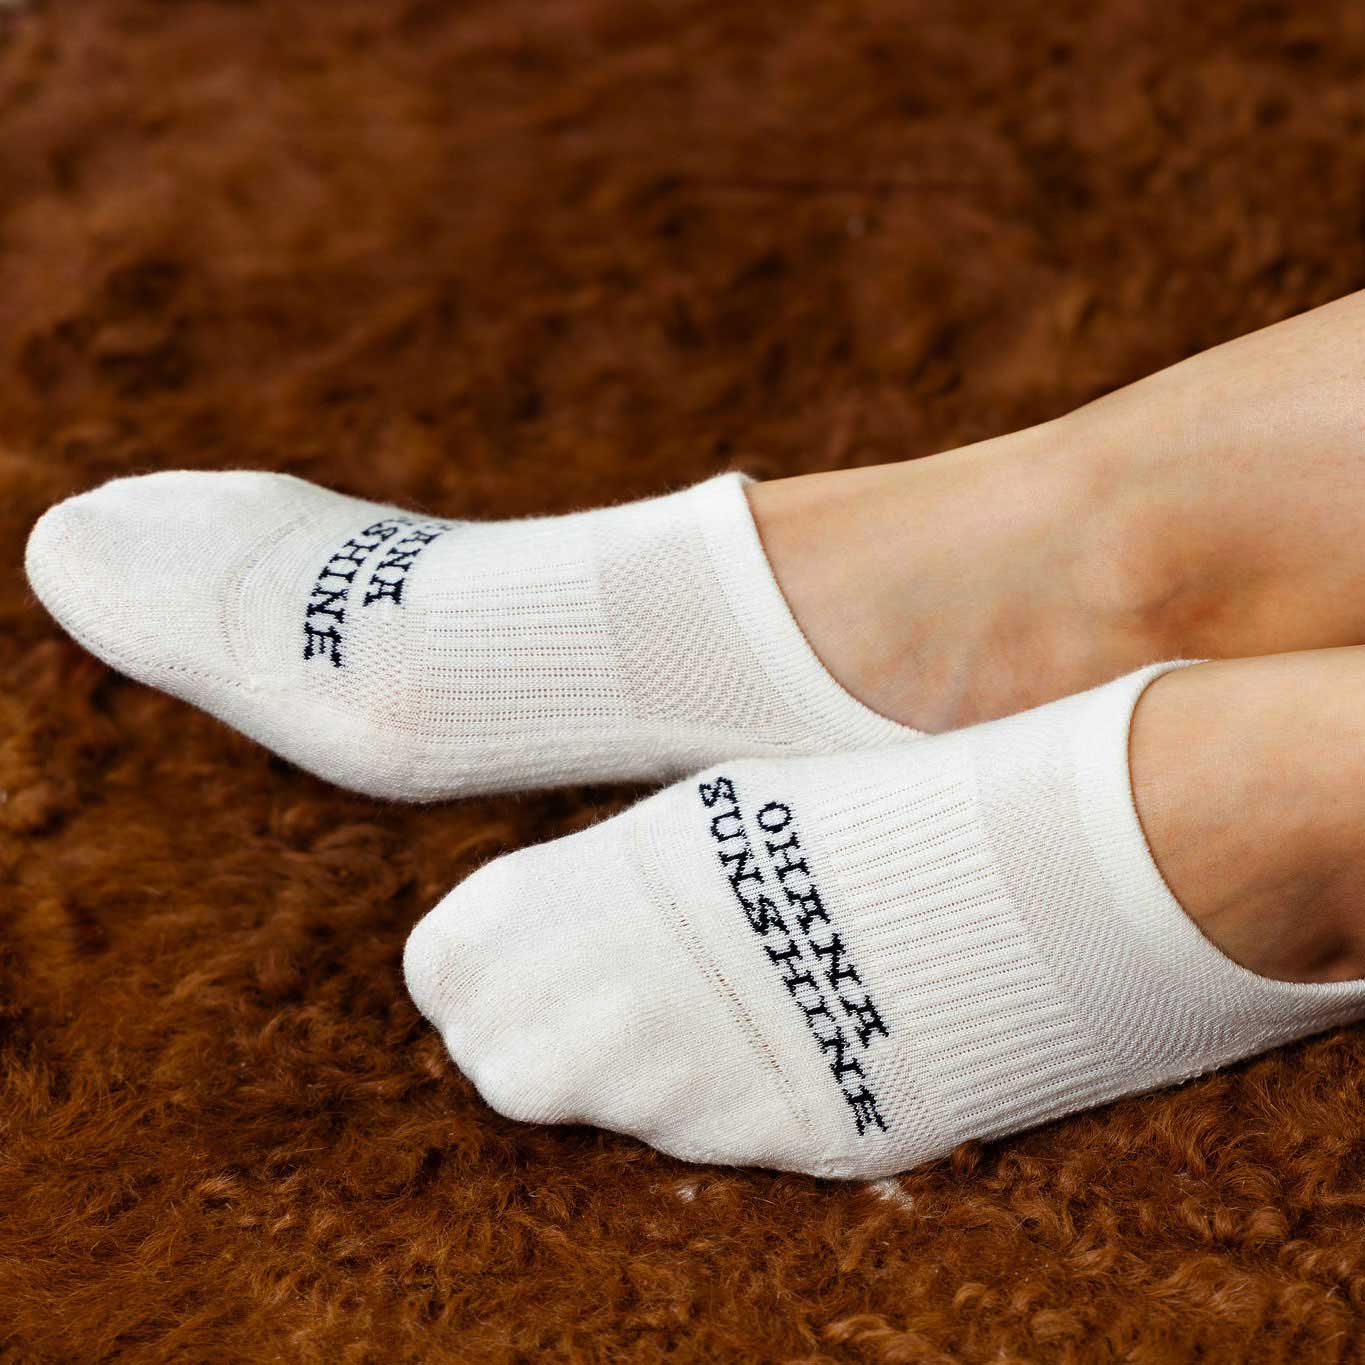 No Nonsense Women's Cushioned Mini Crew Socks - Experience Comfort